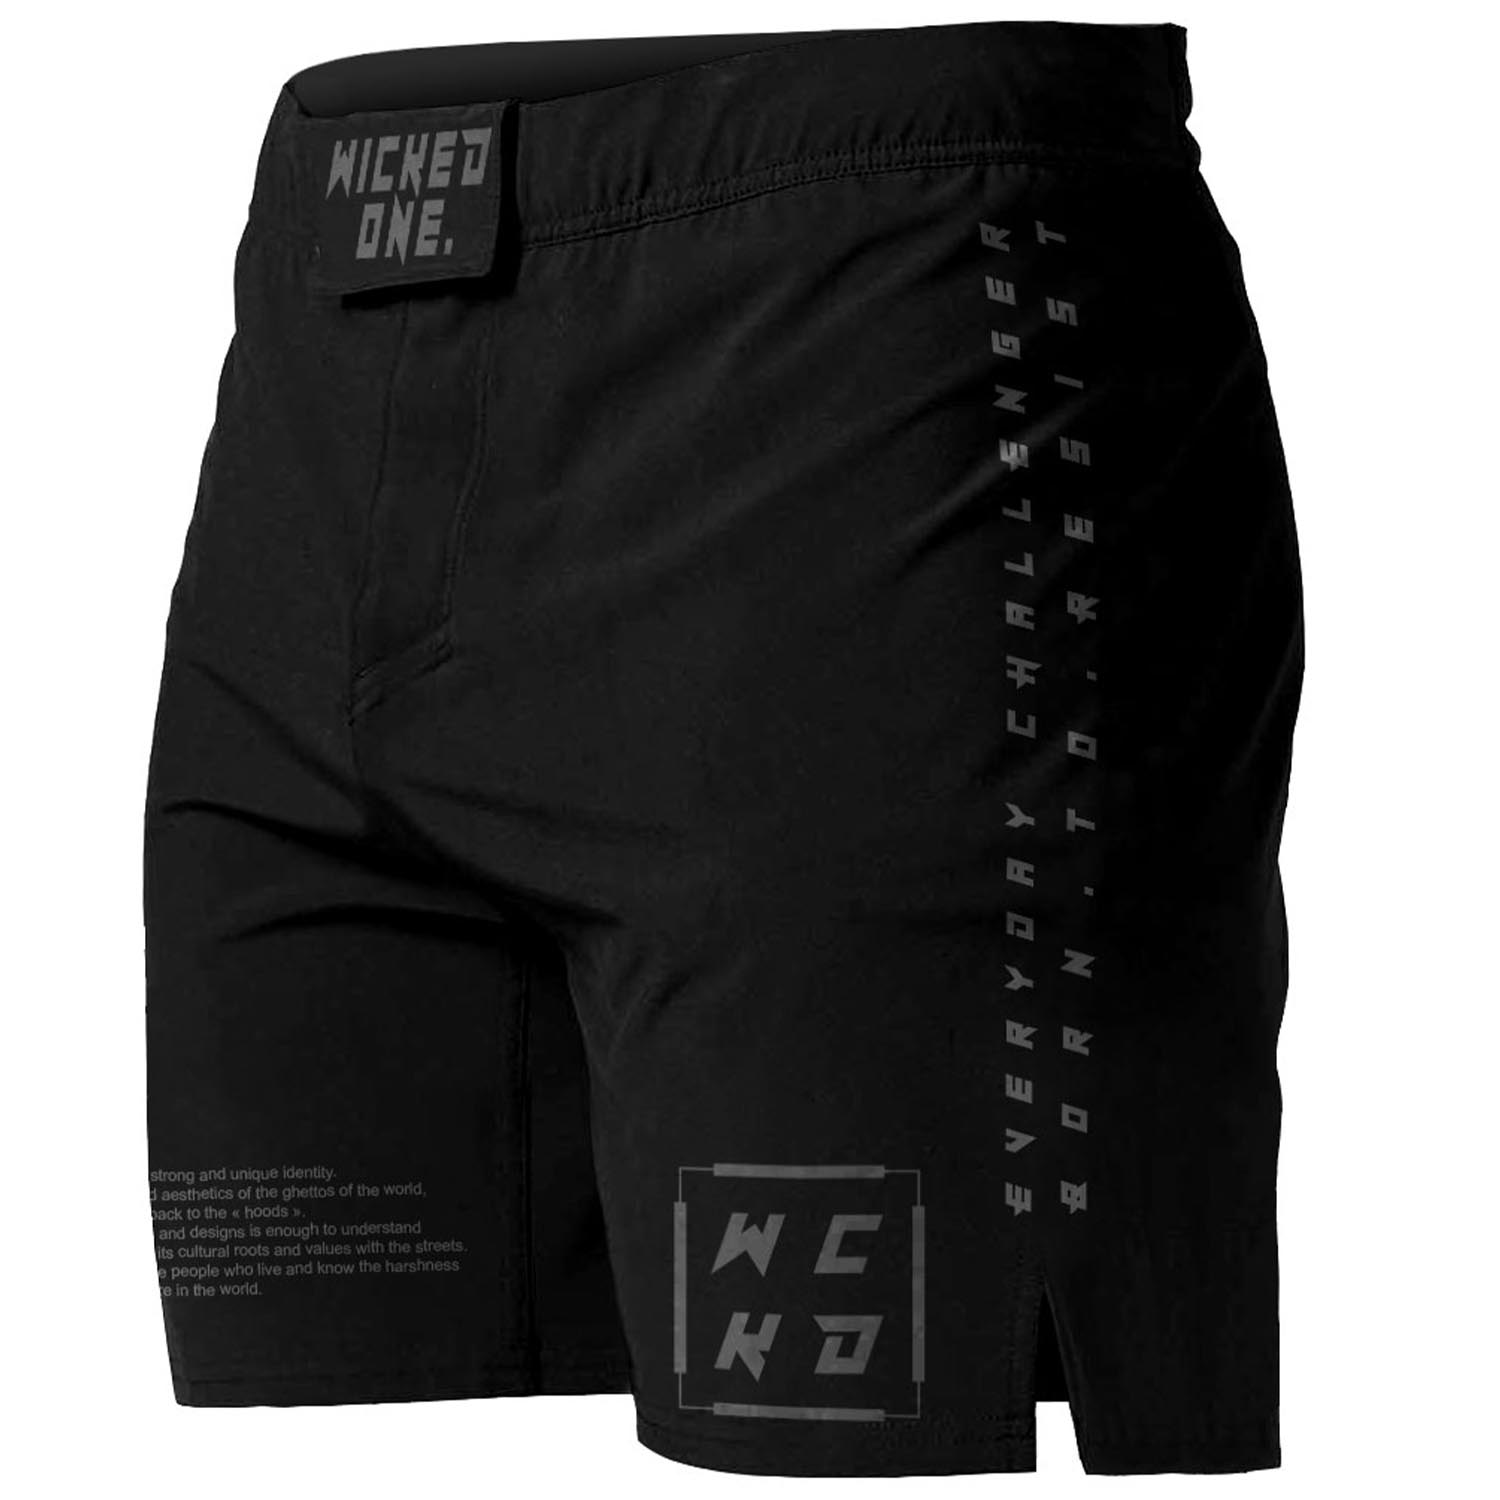 Wicked One Training Shorts, Score, black